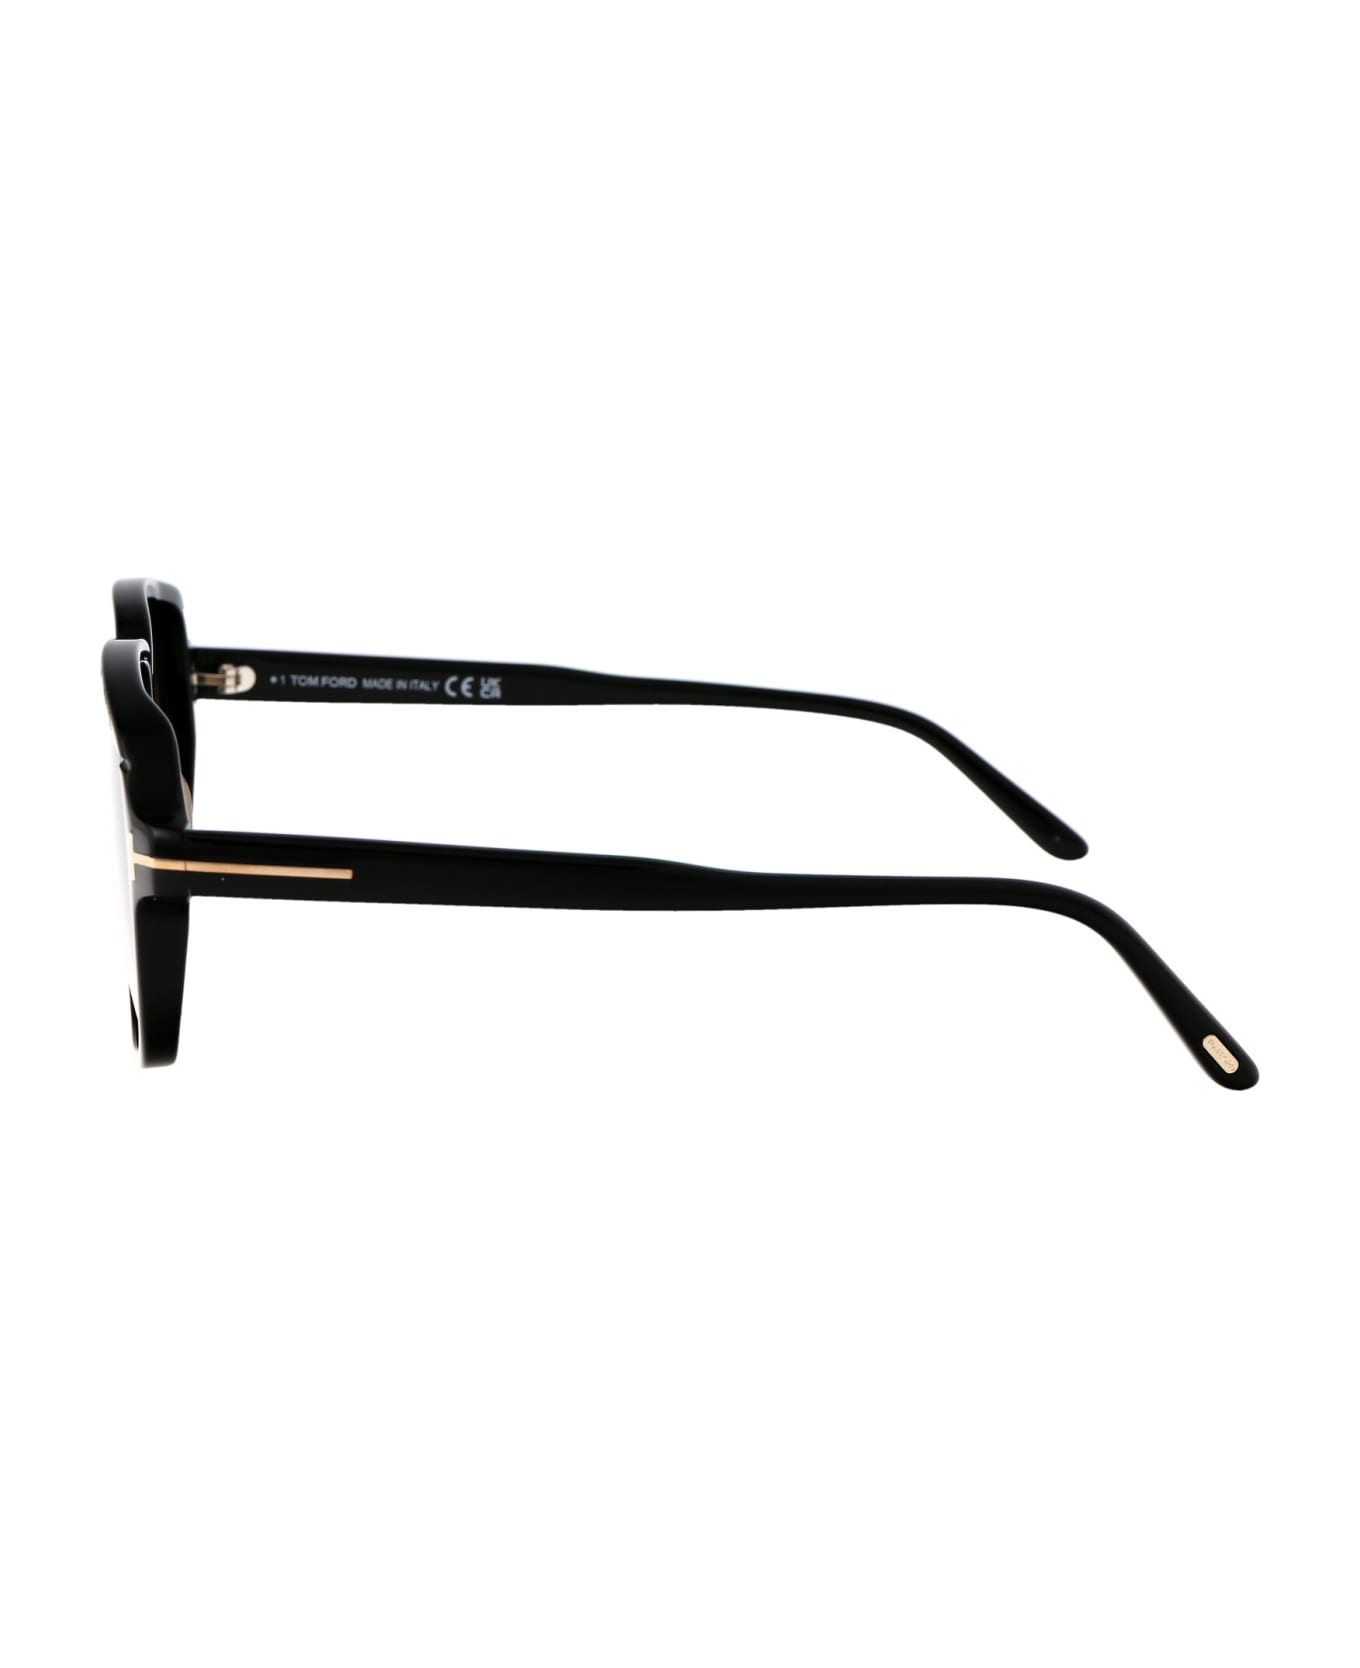 Tom Ford Eyewear Anton Sunglasses - 01B Nero Lucido / Fumo Grad サングラス